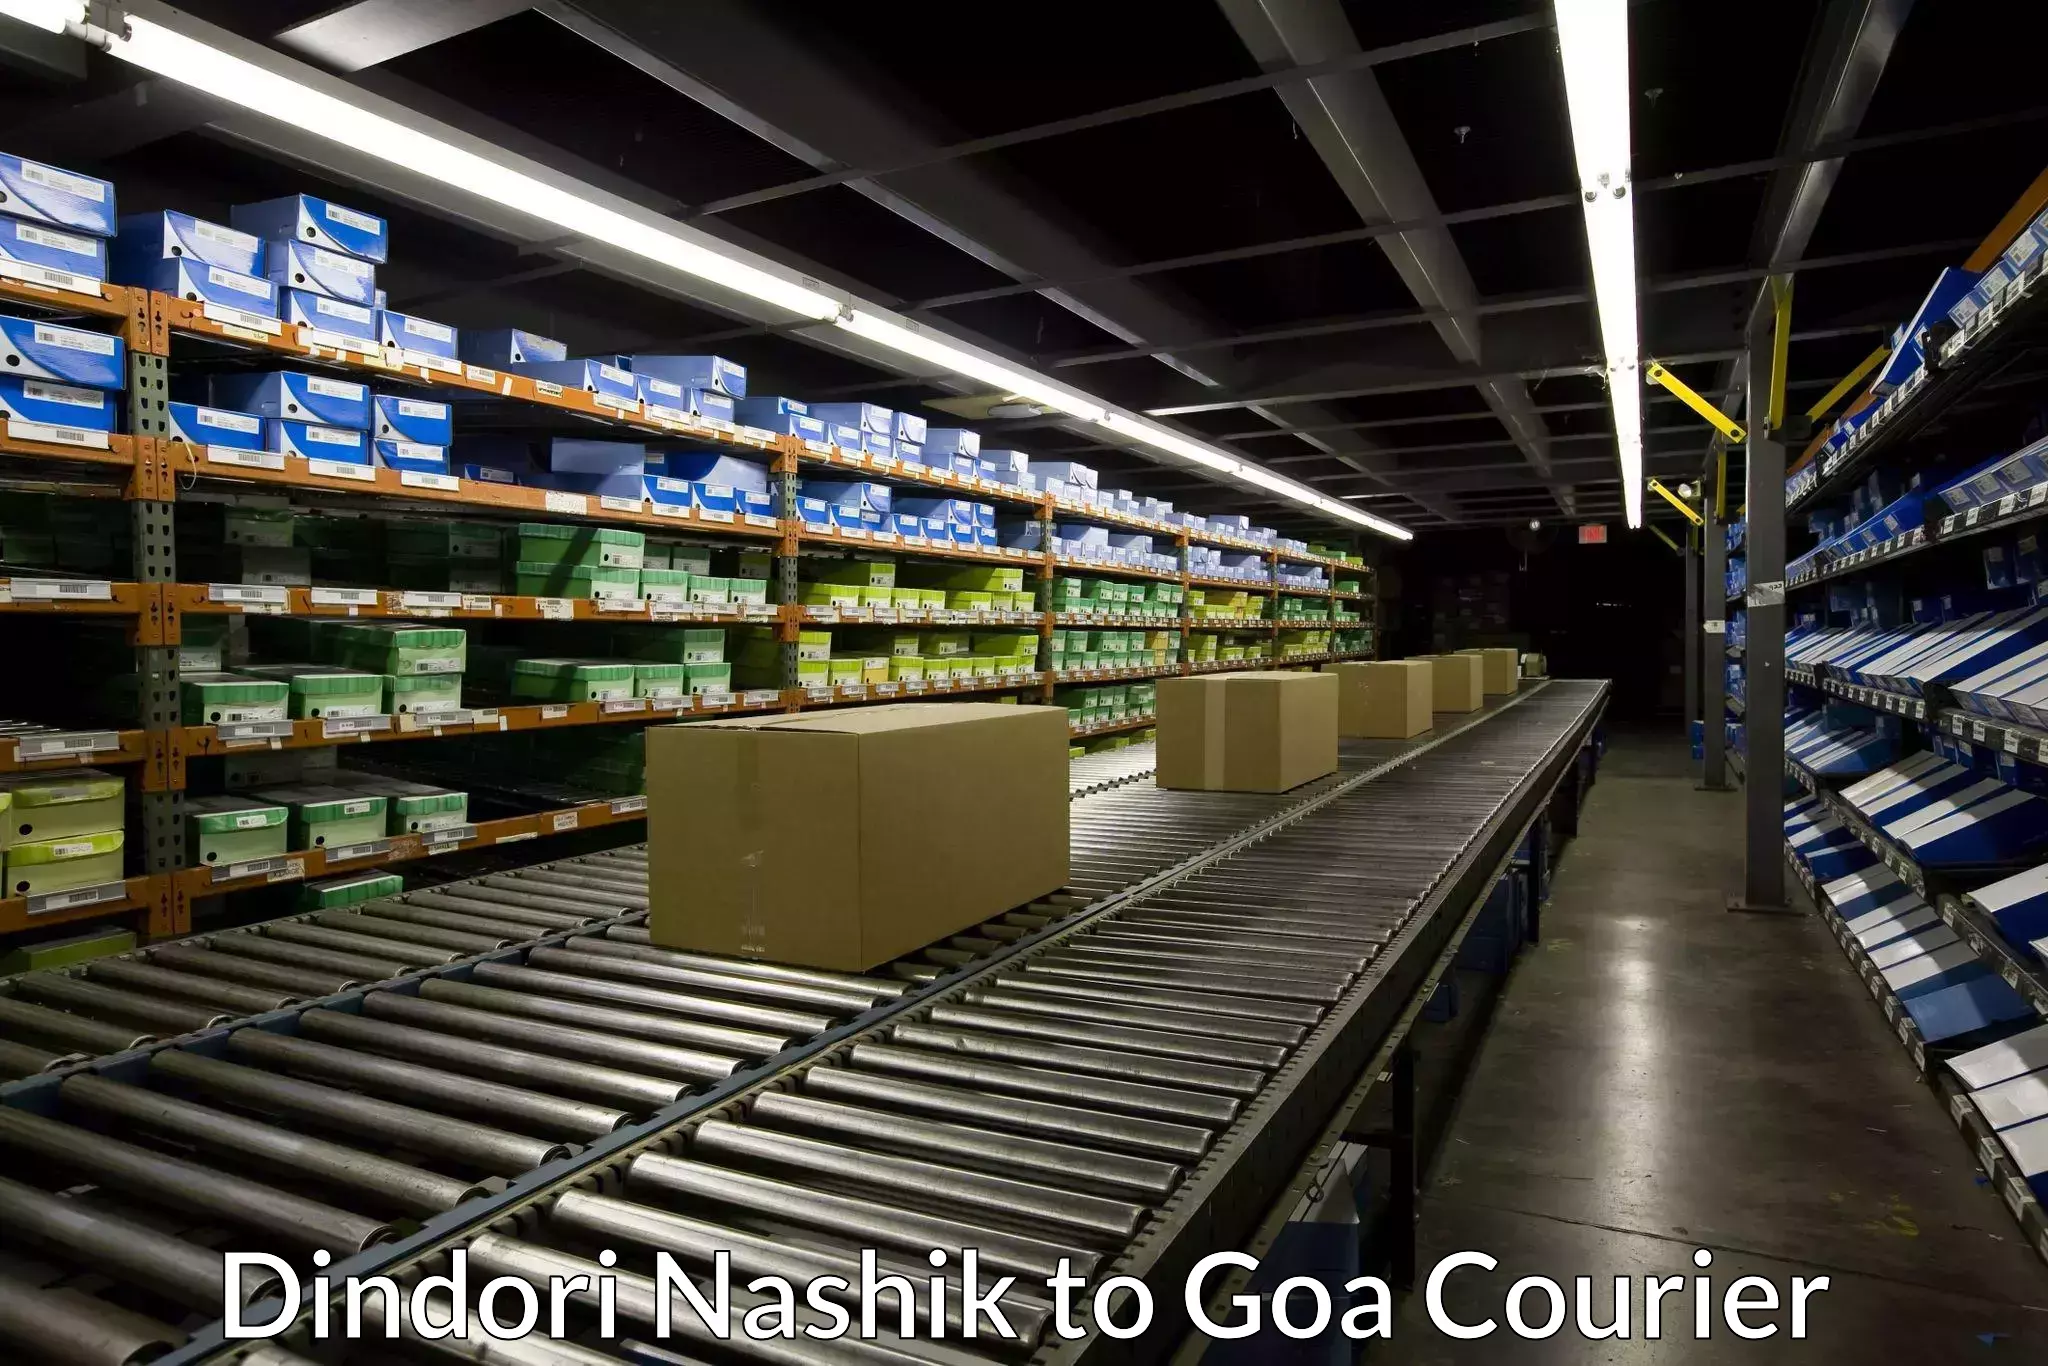 Logistics service provider Dindori Nashik to Goa